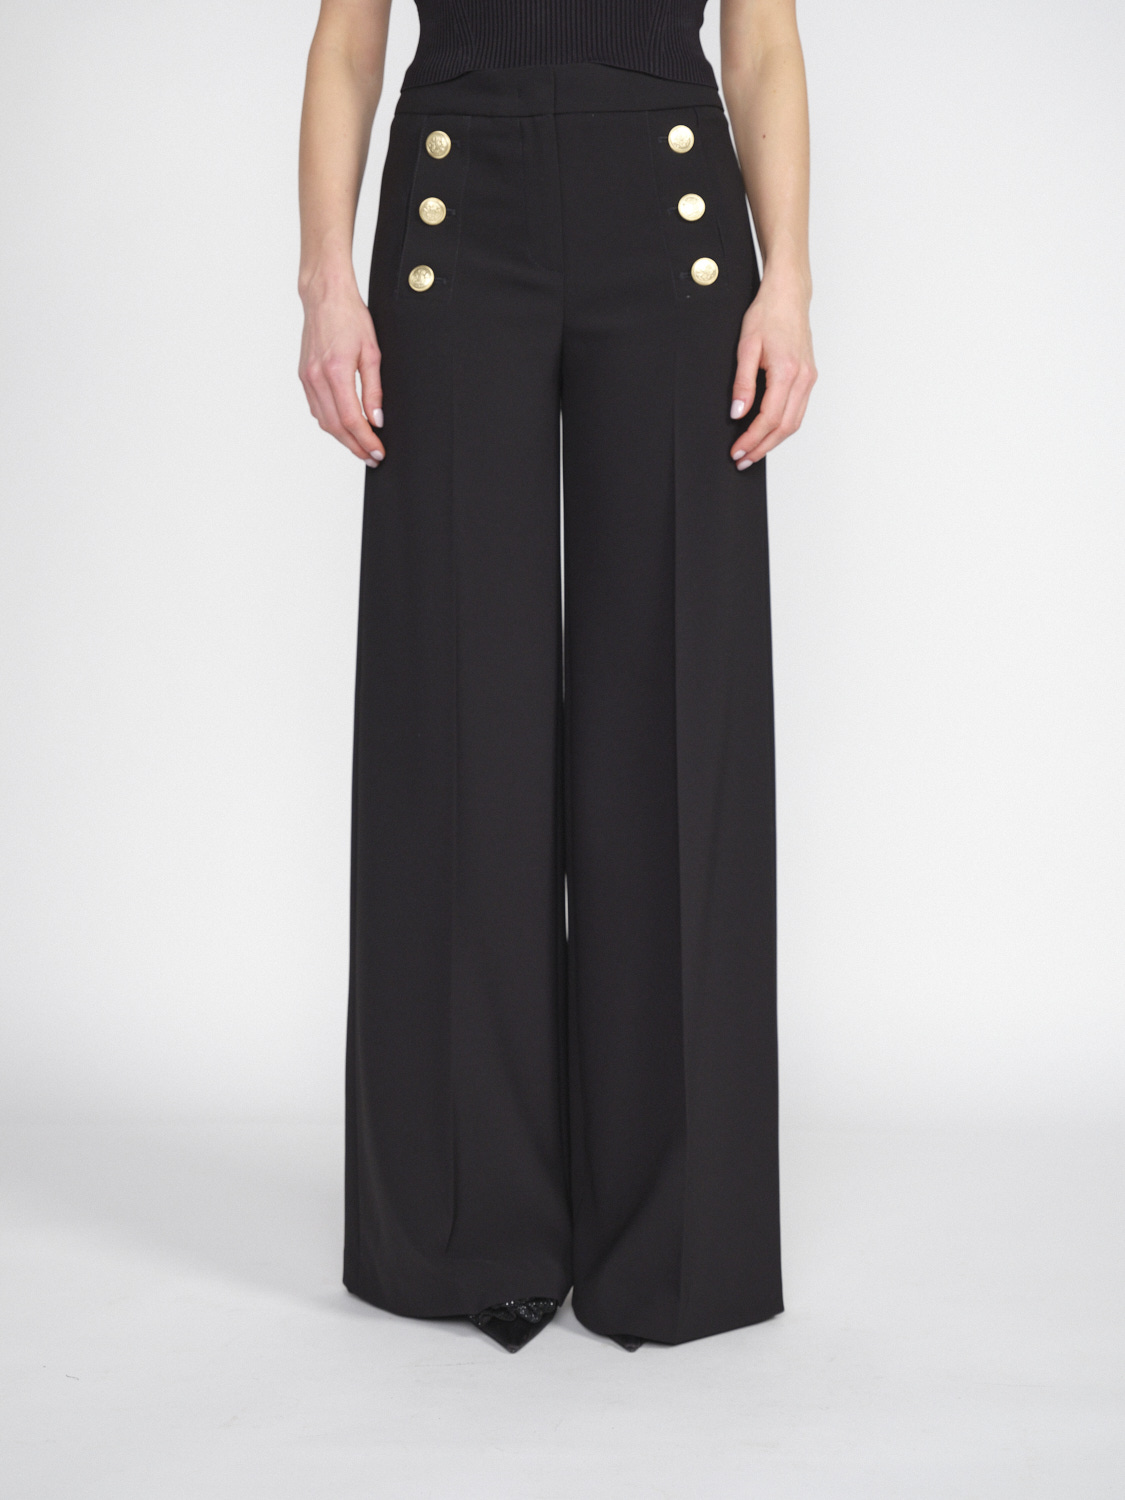 Seductive Bridget - Stretchy trousers with gold button details  black 34